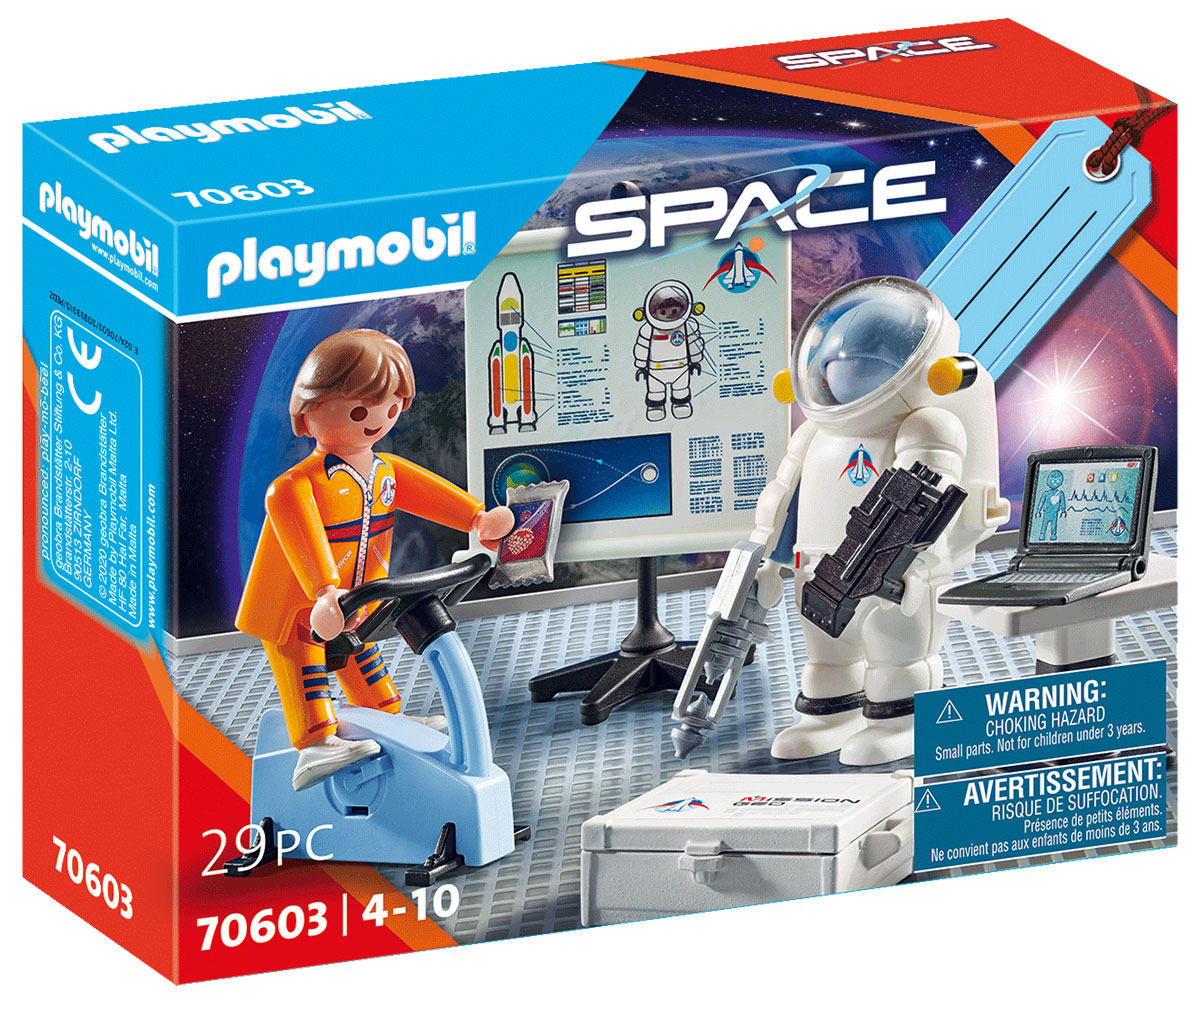 Figurine Playmobil® 30103950 Enfant